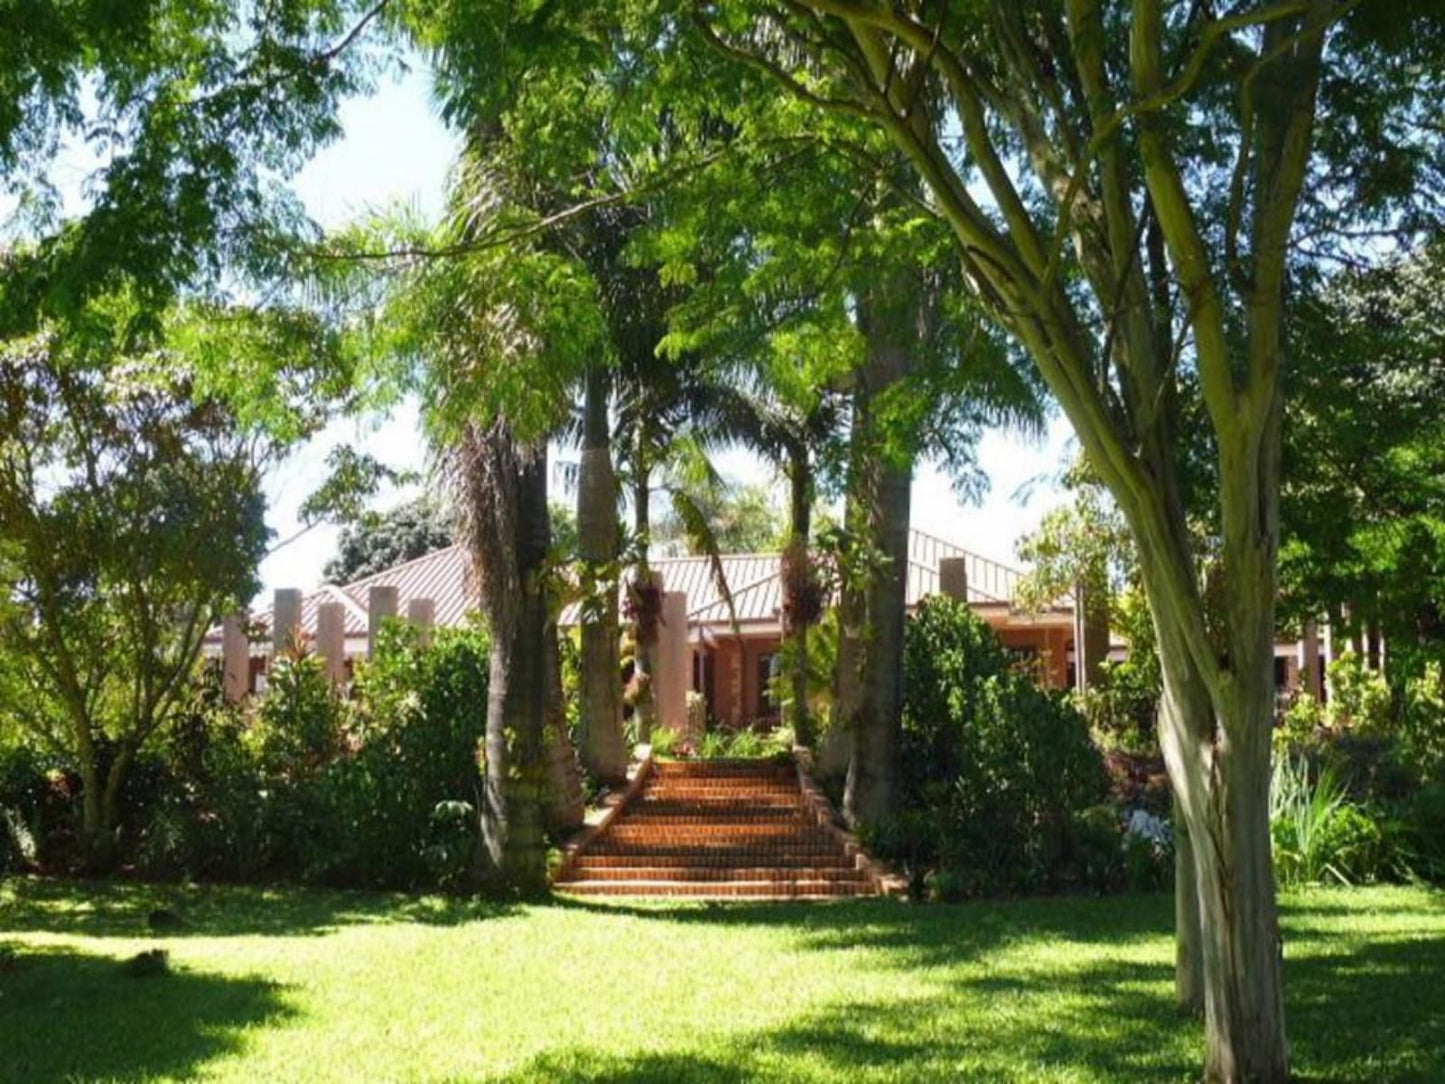 Kudeta B And B White River Mpumalanga South Africa House, Building, Architecture, Palm Tree, Plant, Nature, Wood, Garden